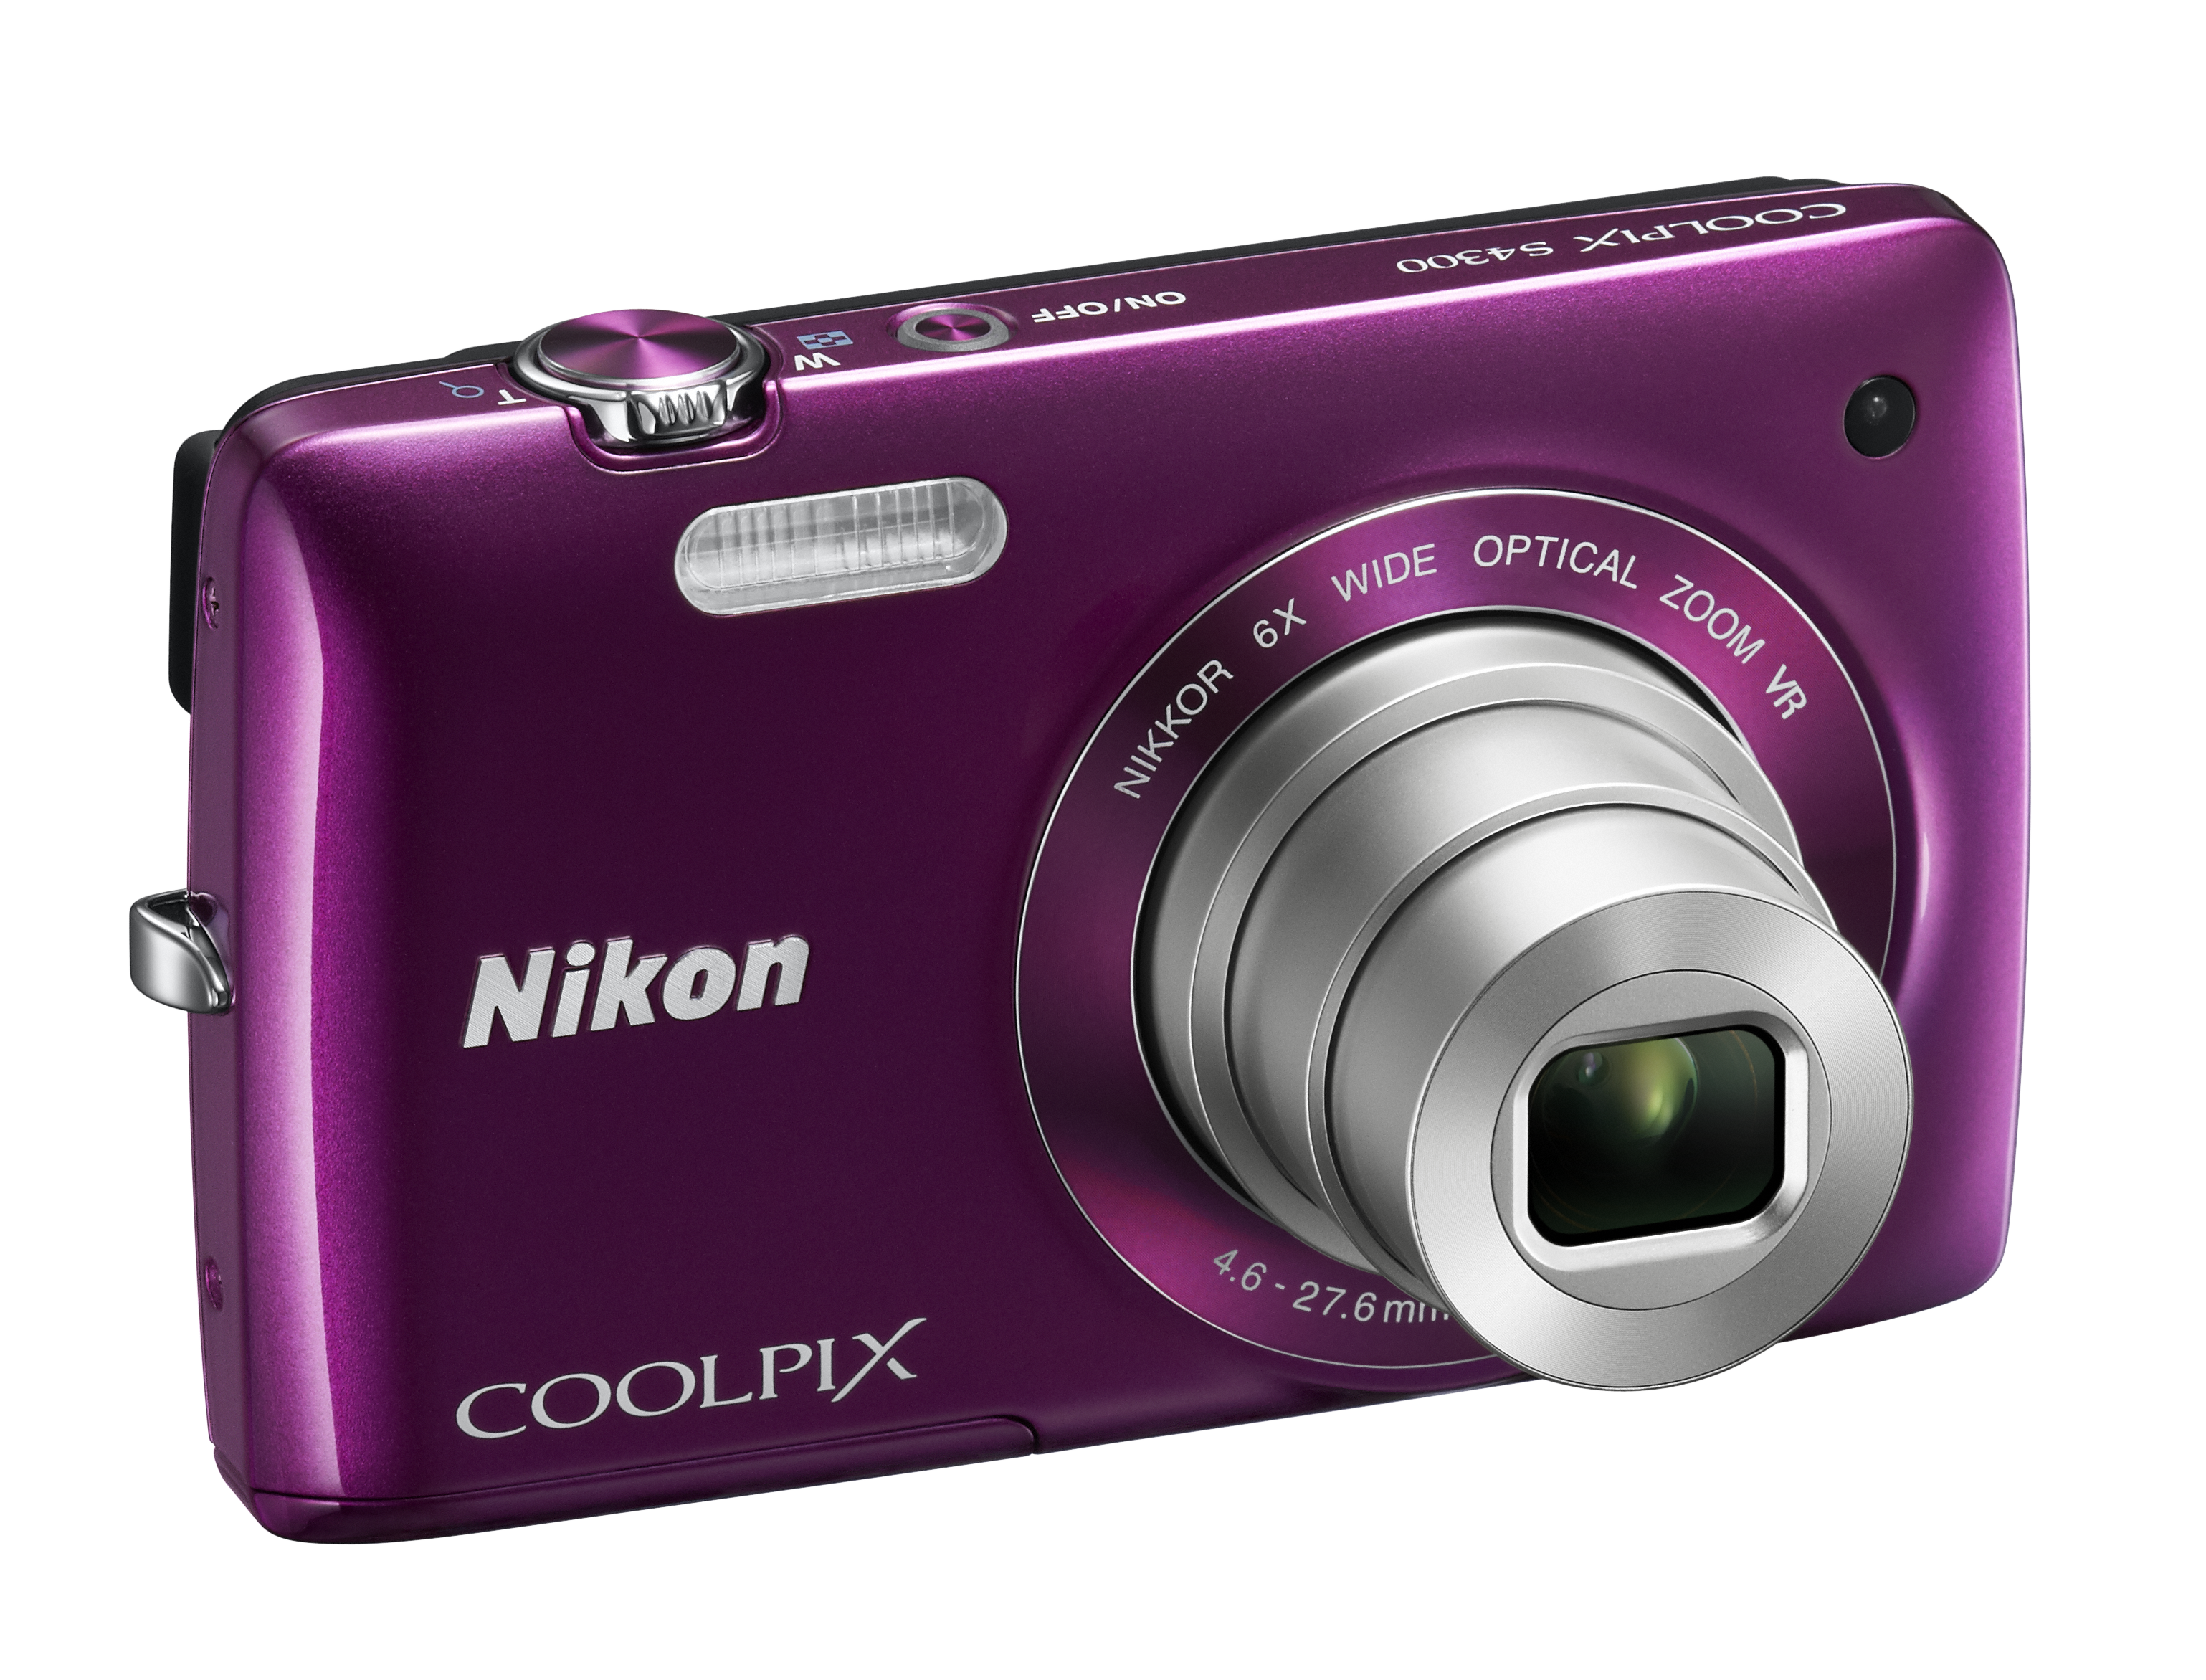 Digital photo png image. Photograph clipart purple camera